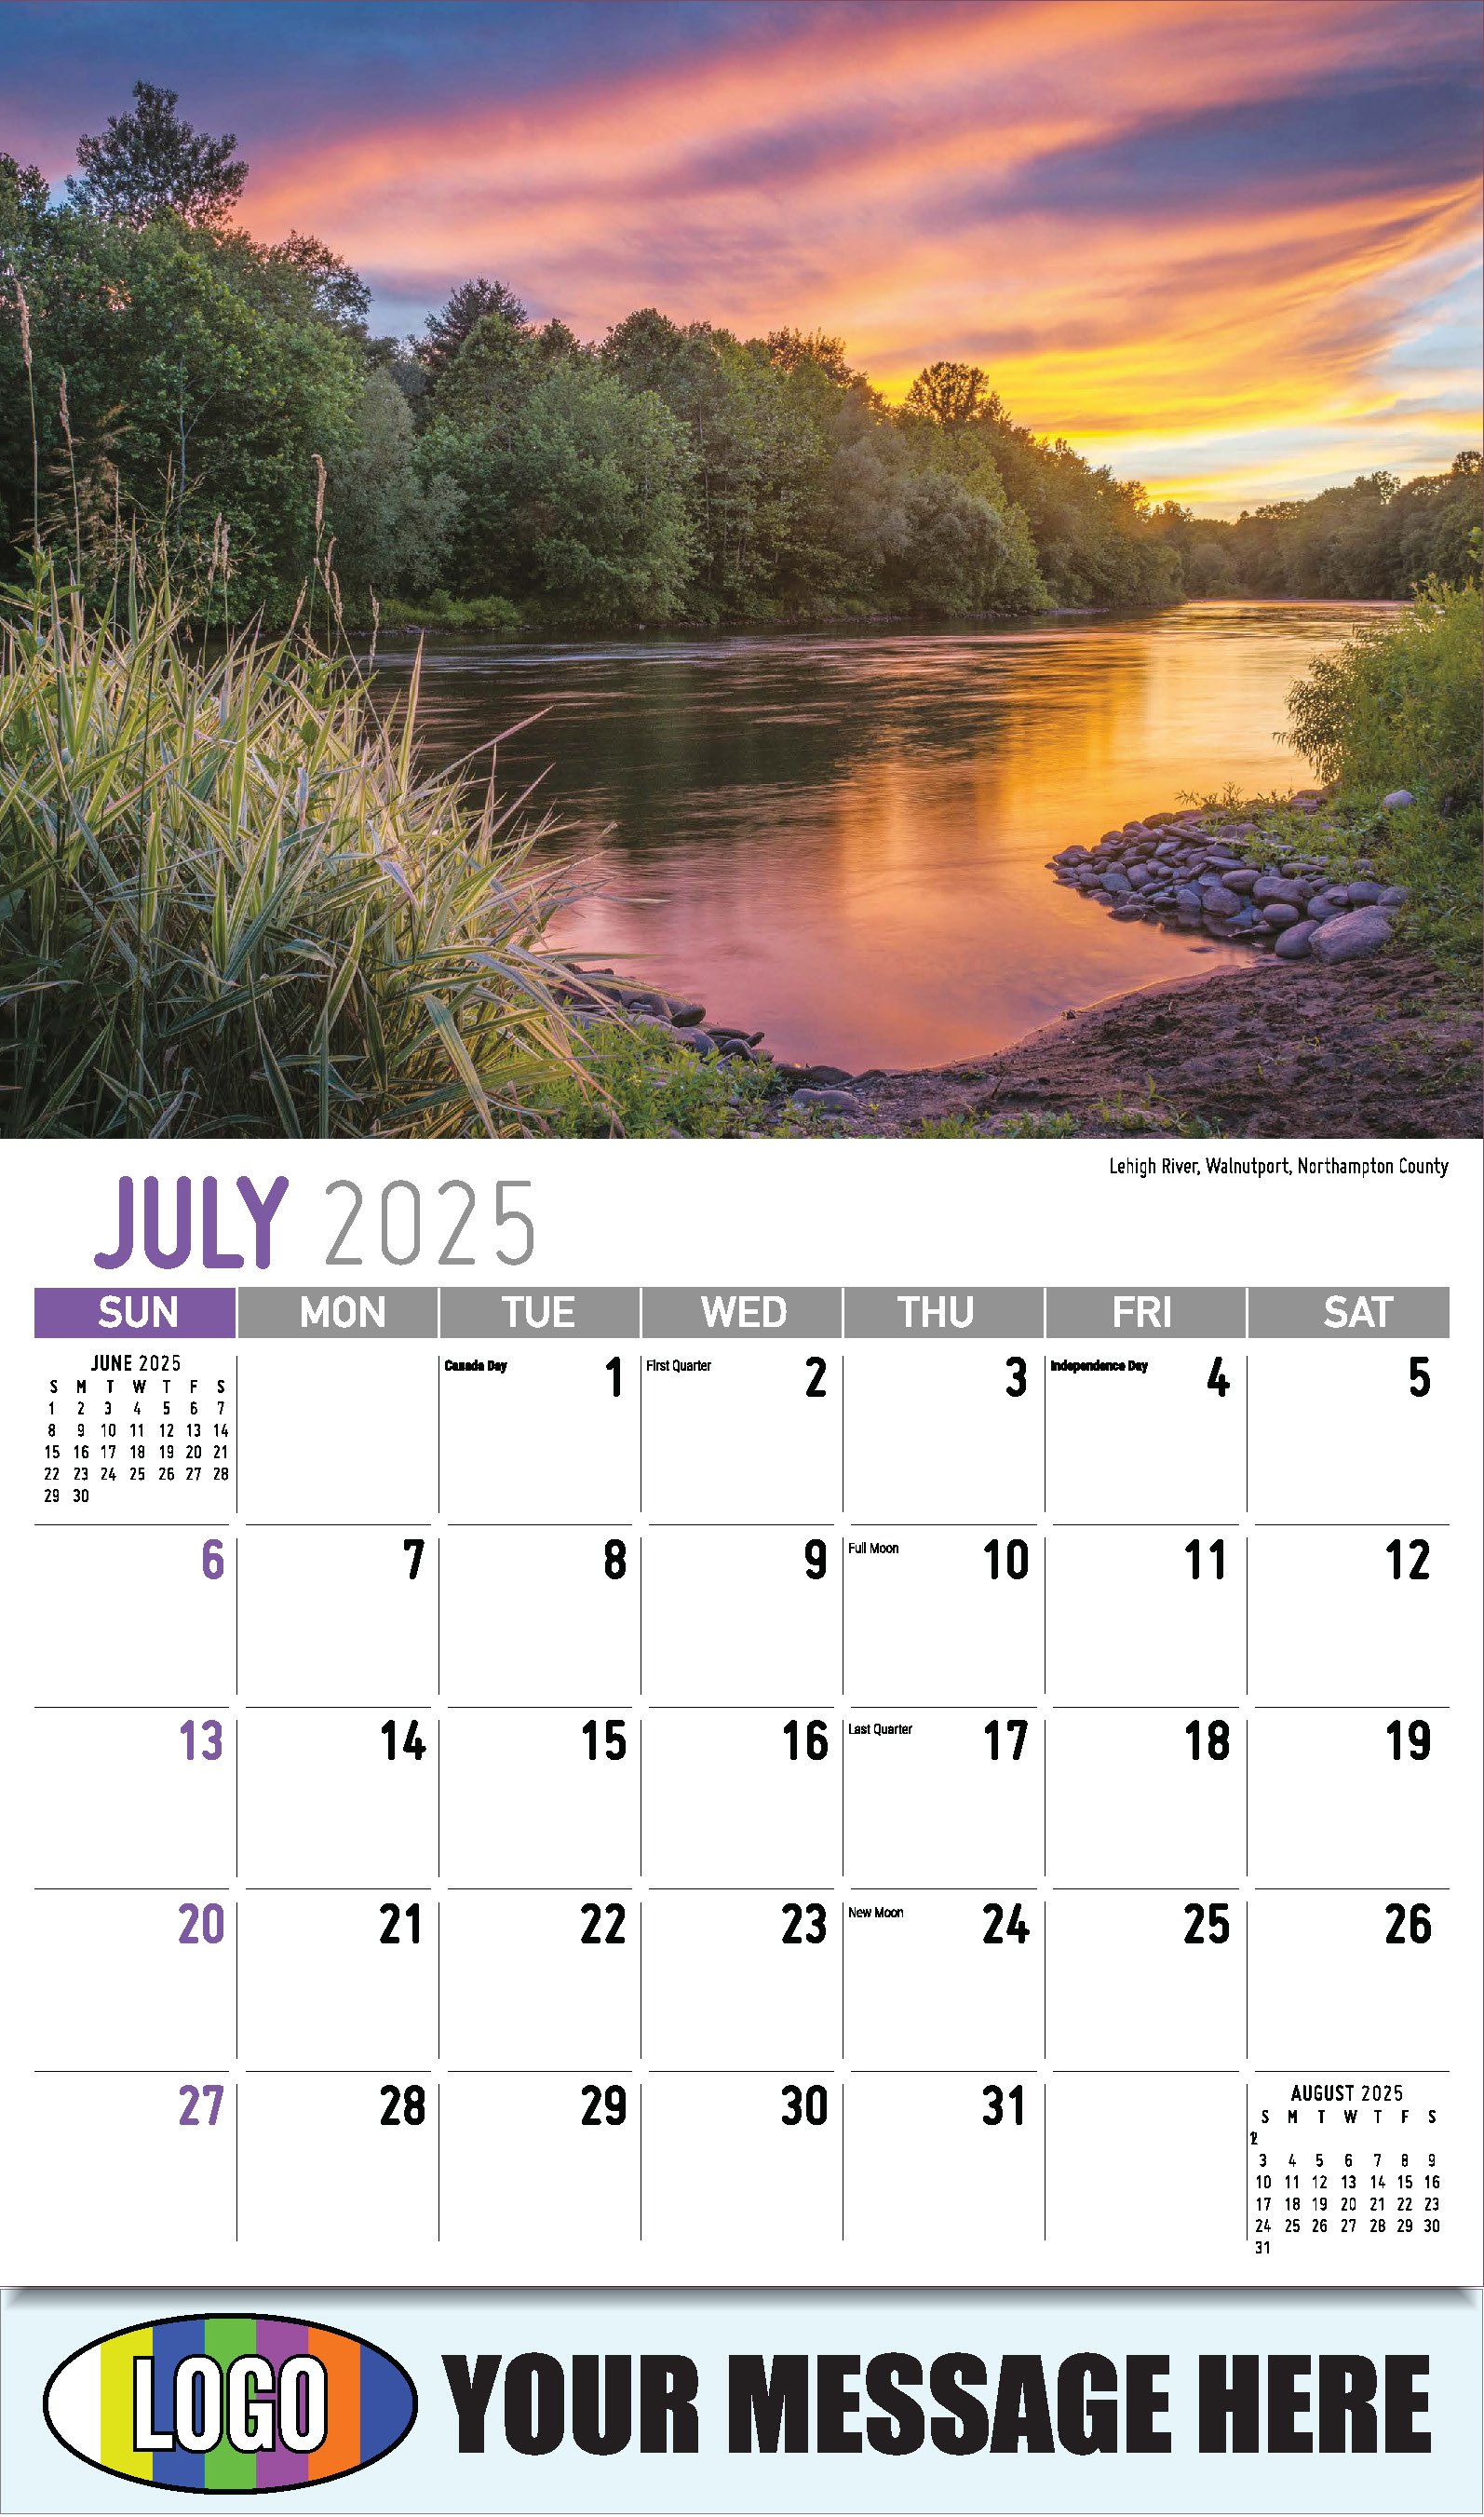 Scenes of Pennsylvania 2025 Business Promotion Calendar - July